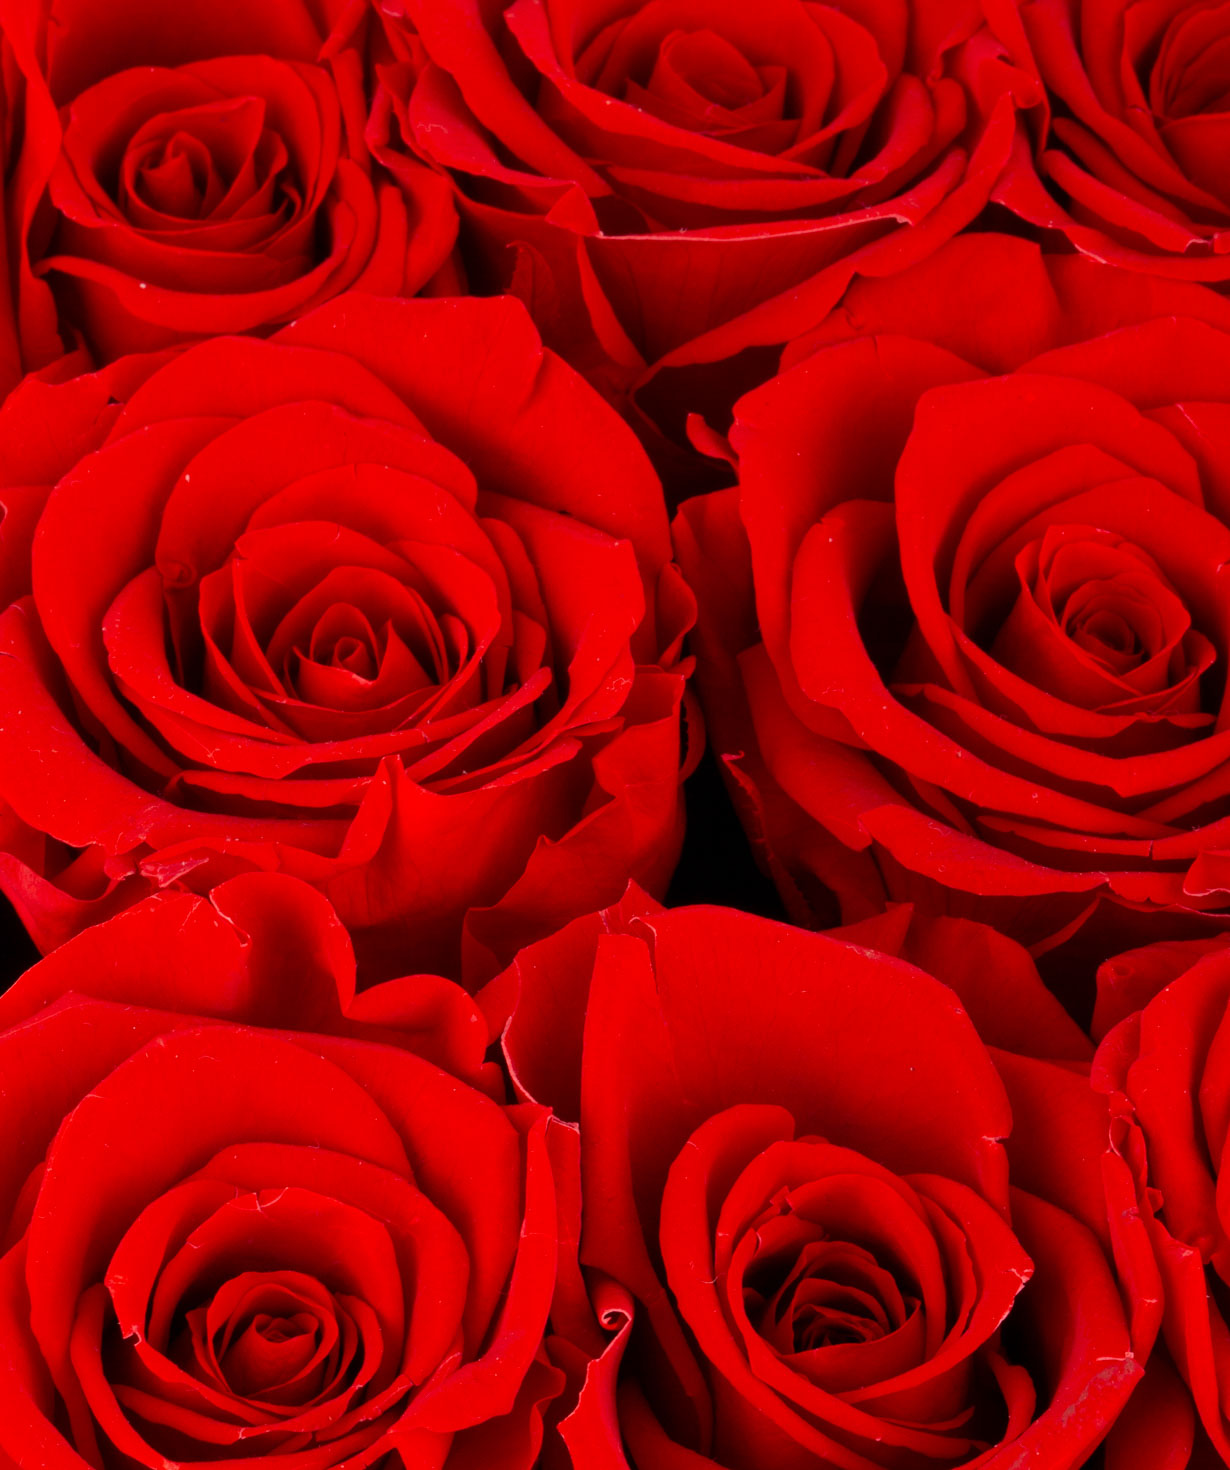 Arrangement `EM Flowers` with red eternal roses